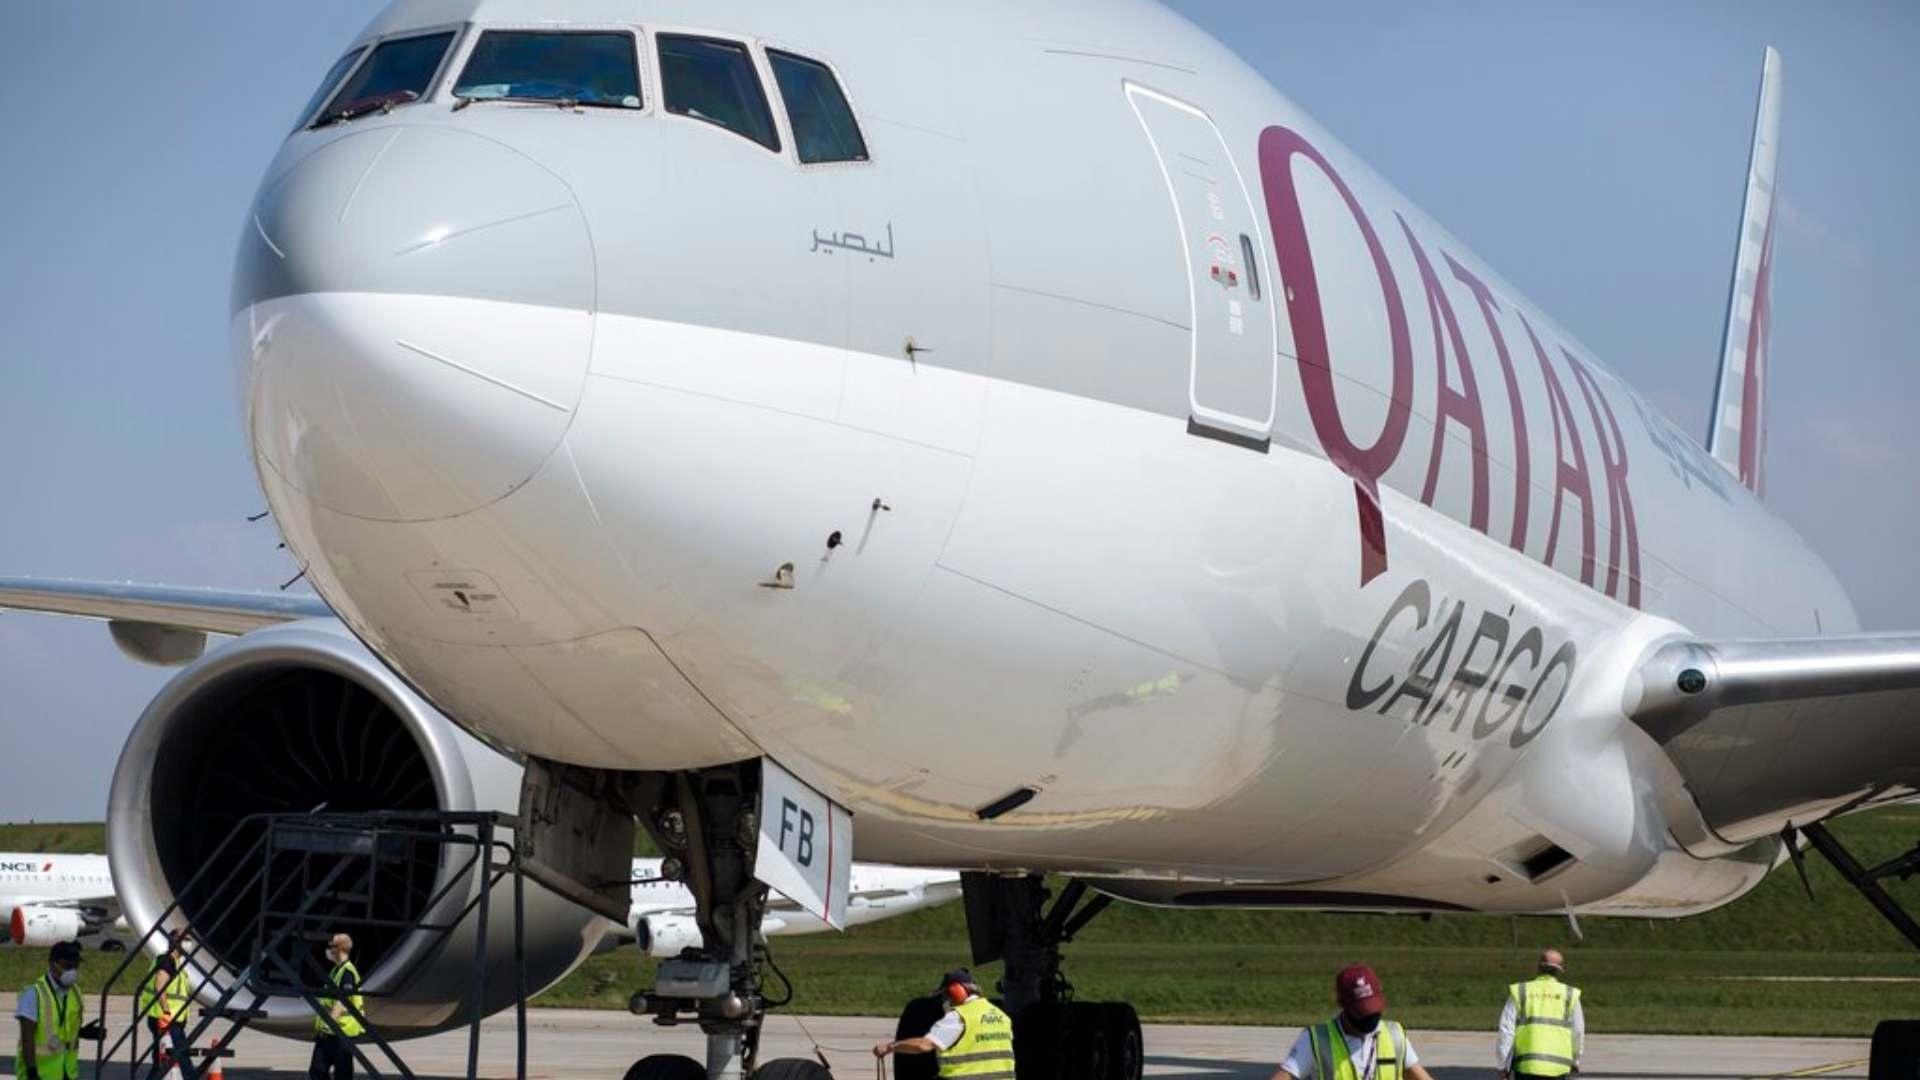 Turbulencias en un Vuelo de Qatar Airways a Dublín Dejan 12 Heridos